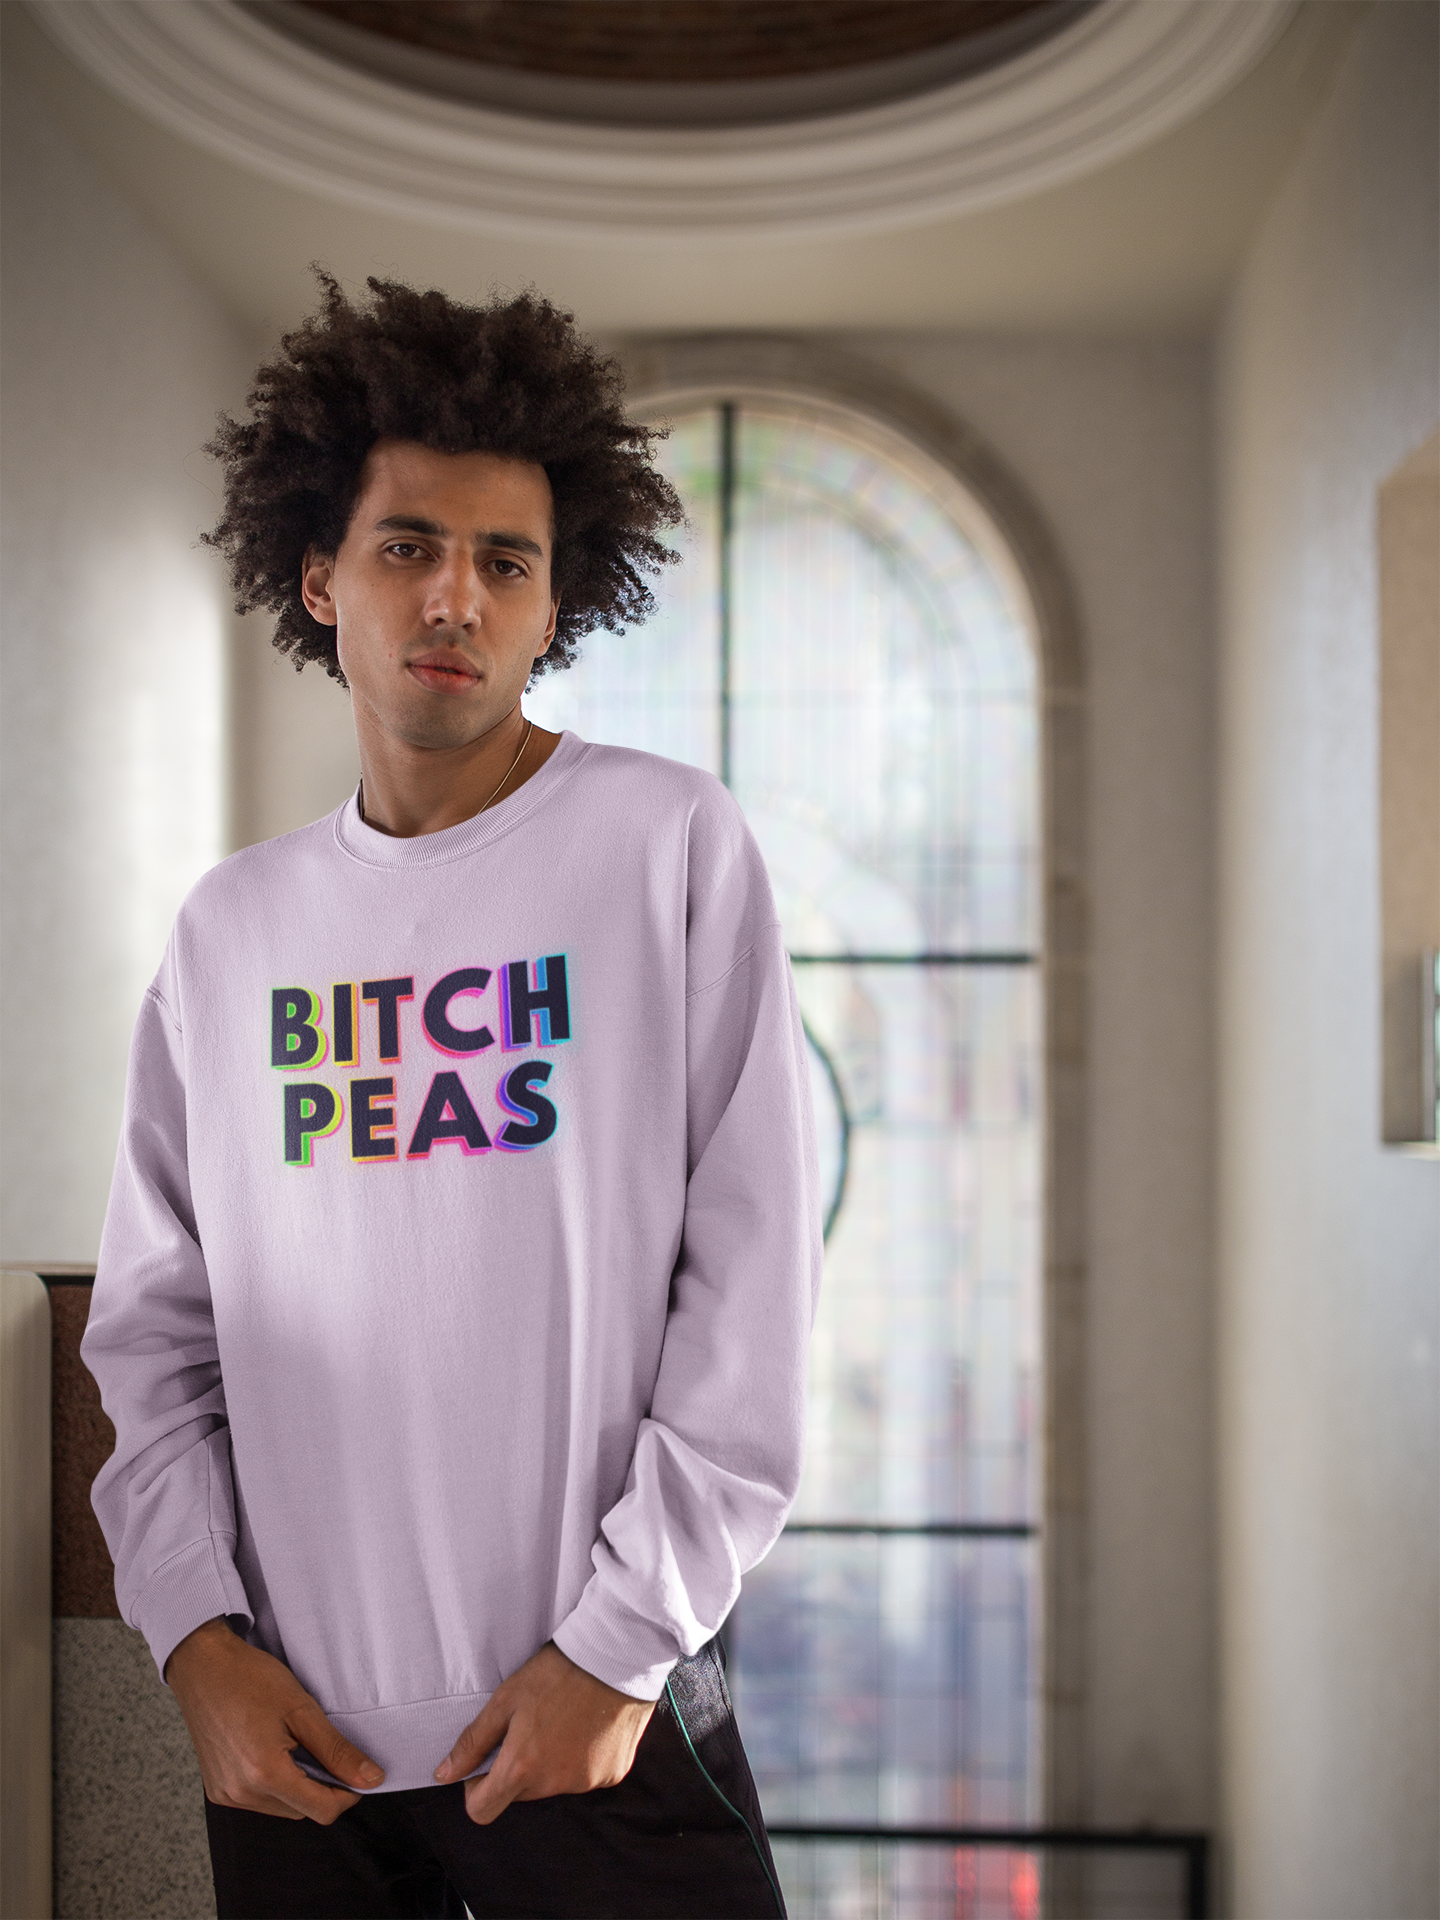 Bitch Peas Sweater Men/Unisex